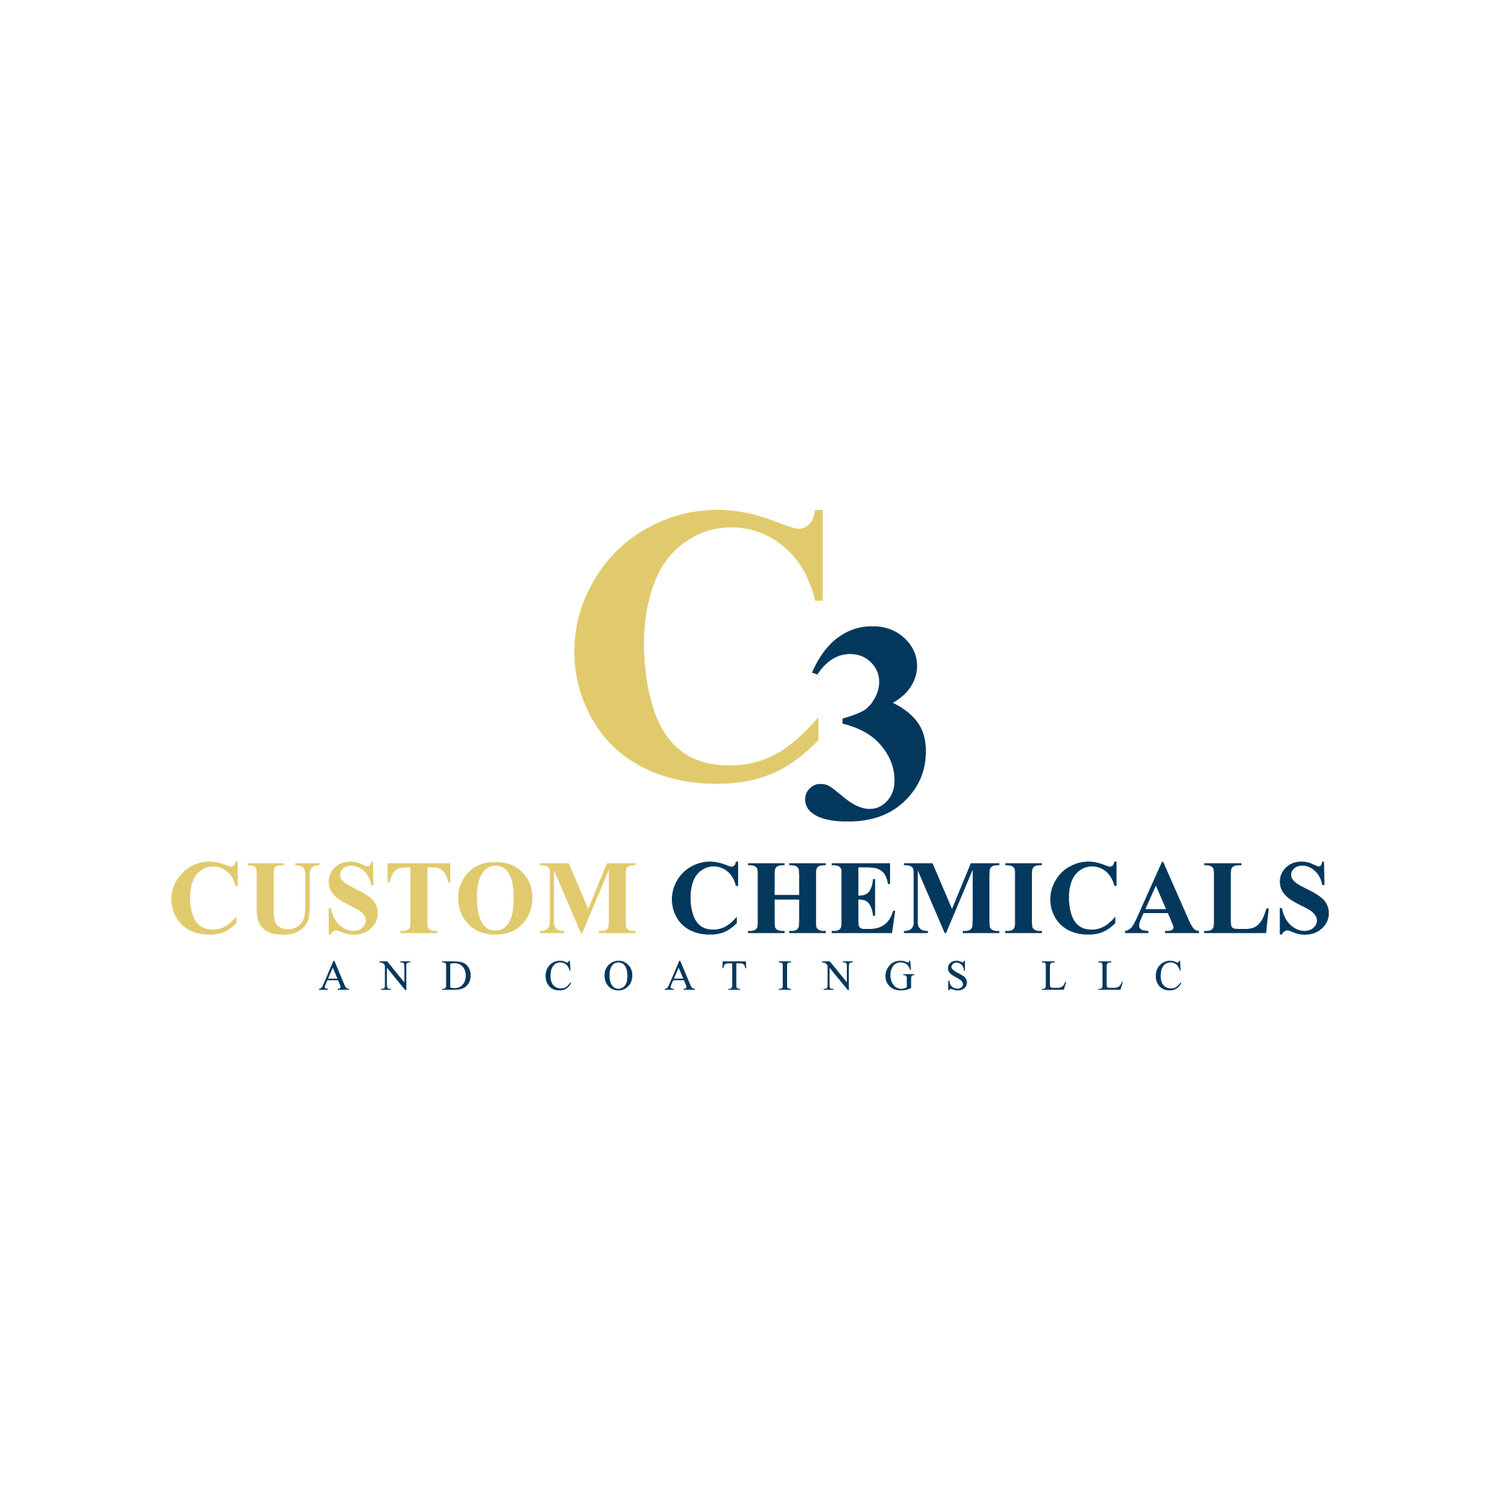 Custom Chemicals and Coatings LLC